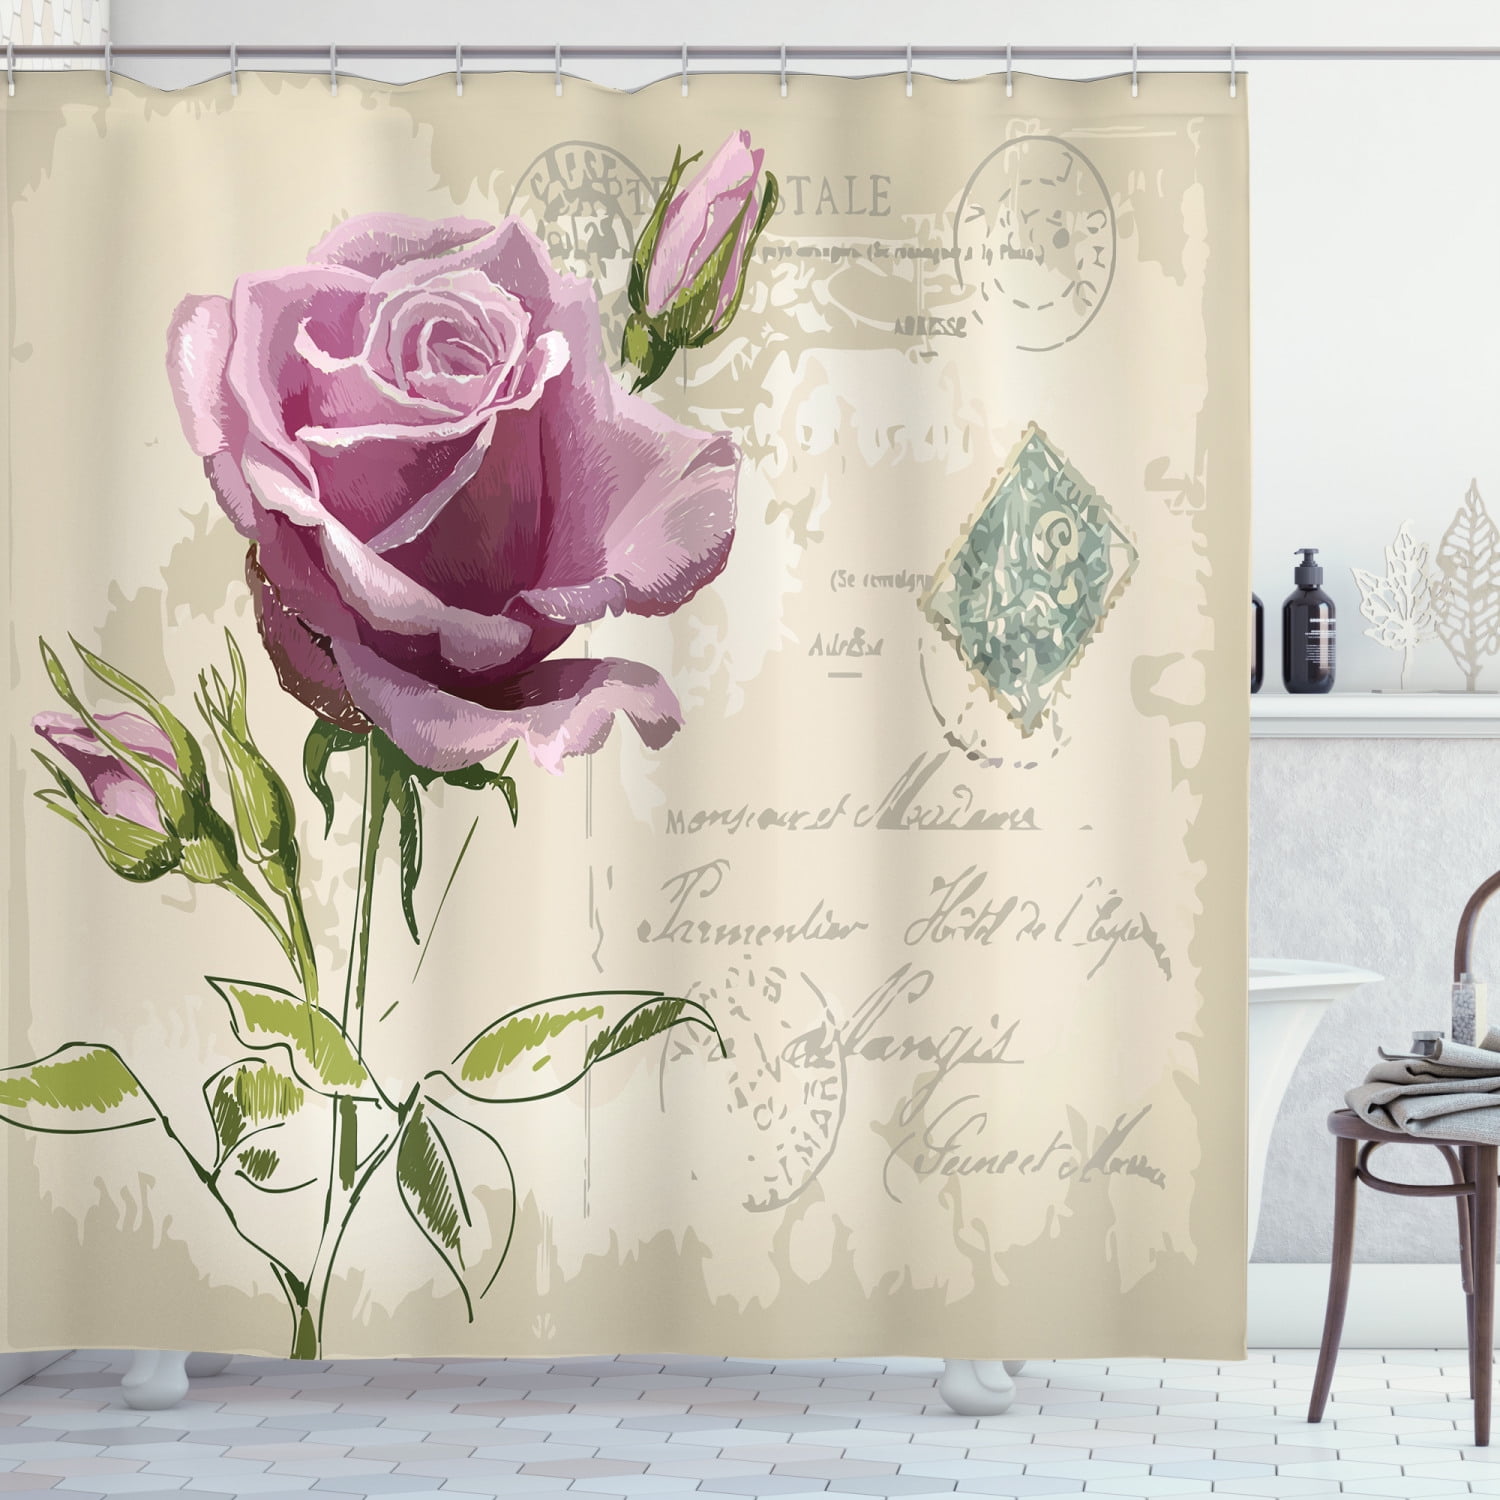 Vintage Rose Postcard Shower Curtain Set Waterproof Fabric Decor Curtains& Hooks 